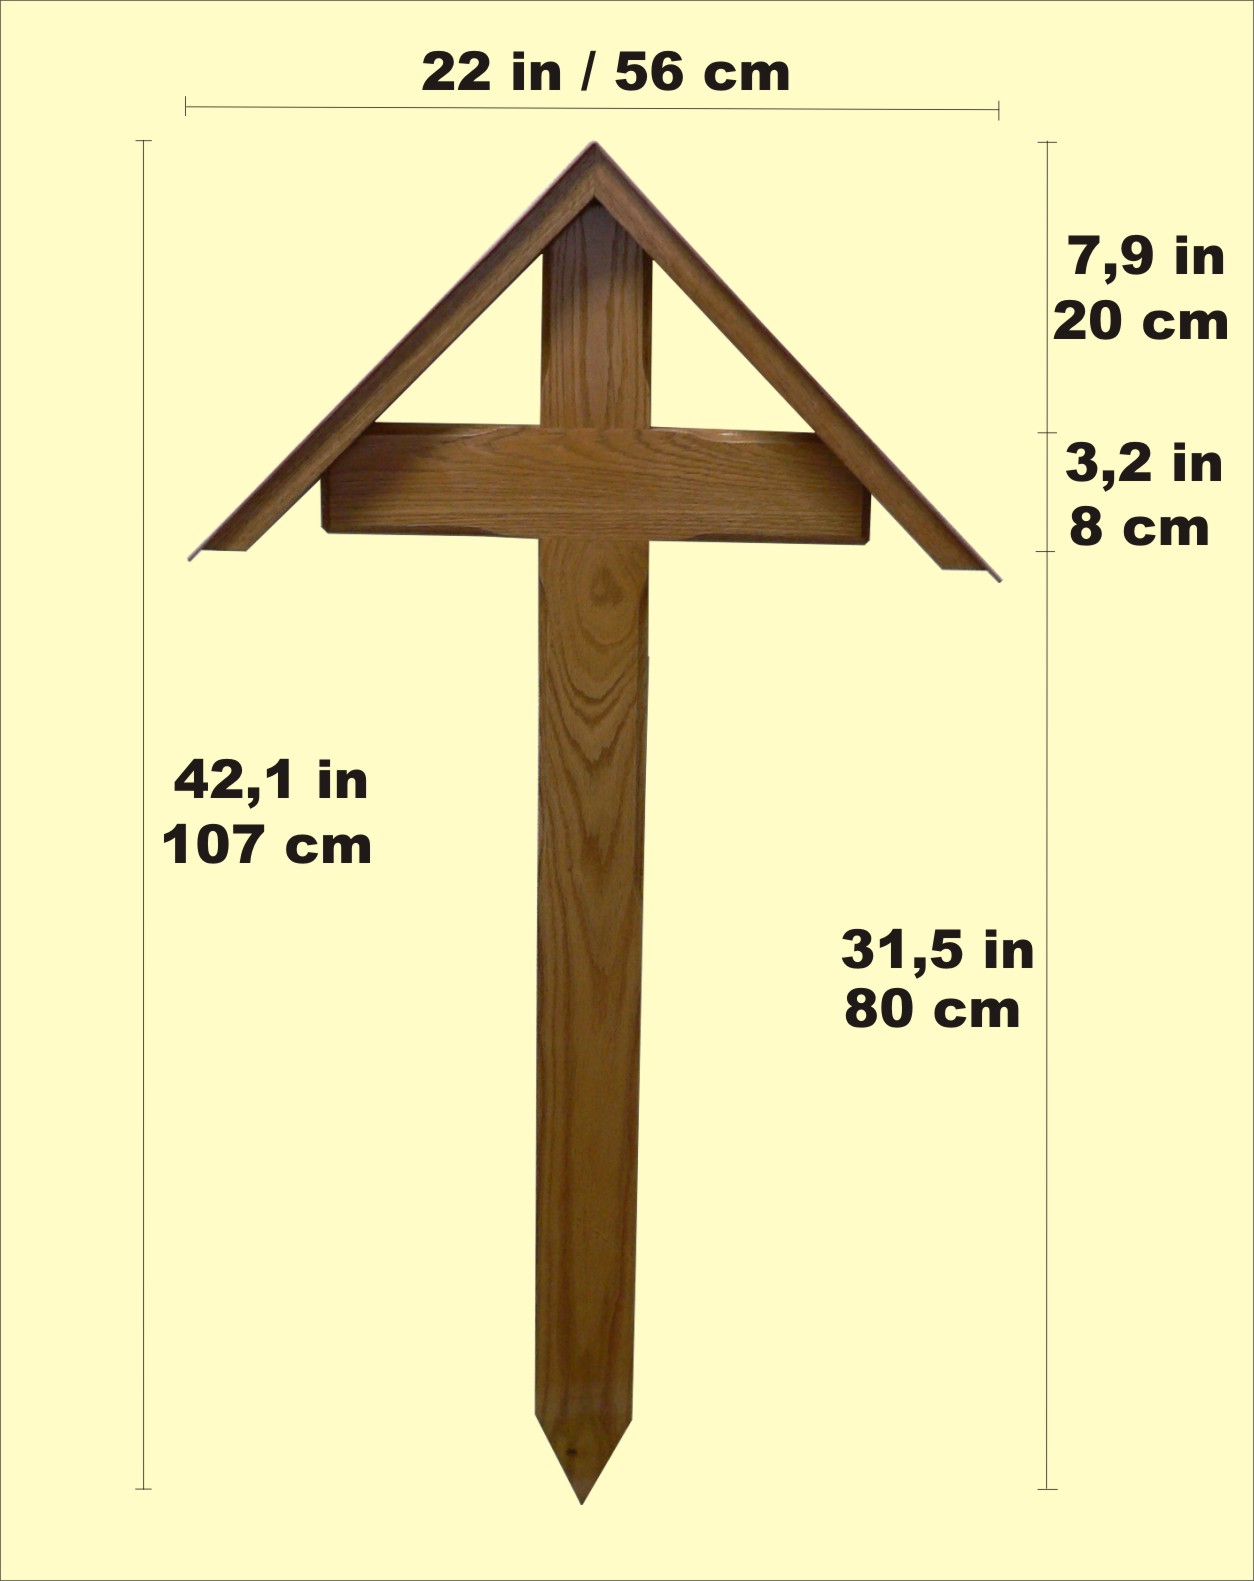 Graveside Memorial Cross 19cm Wife 60895 